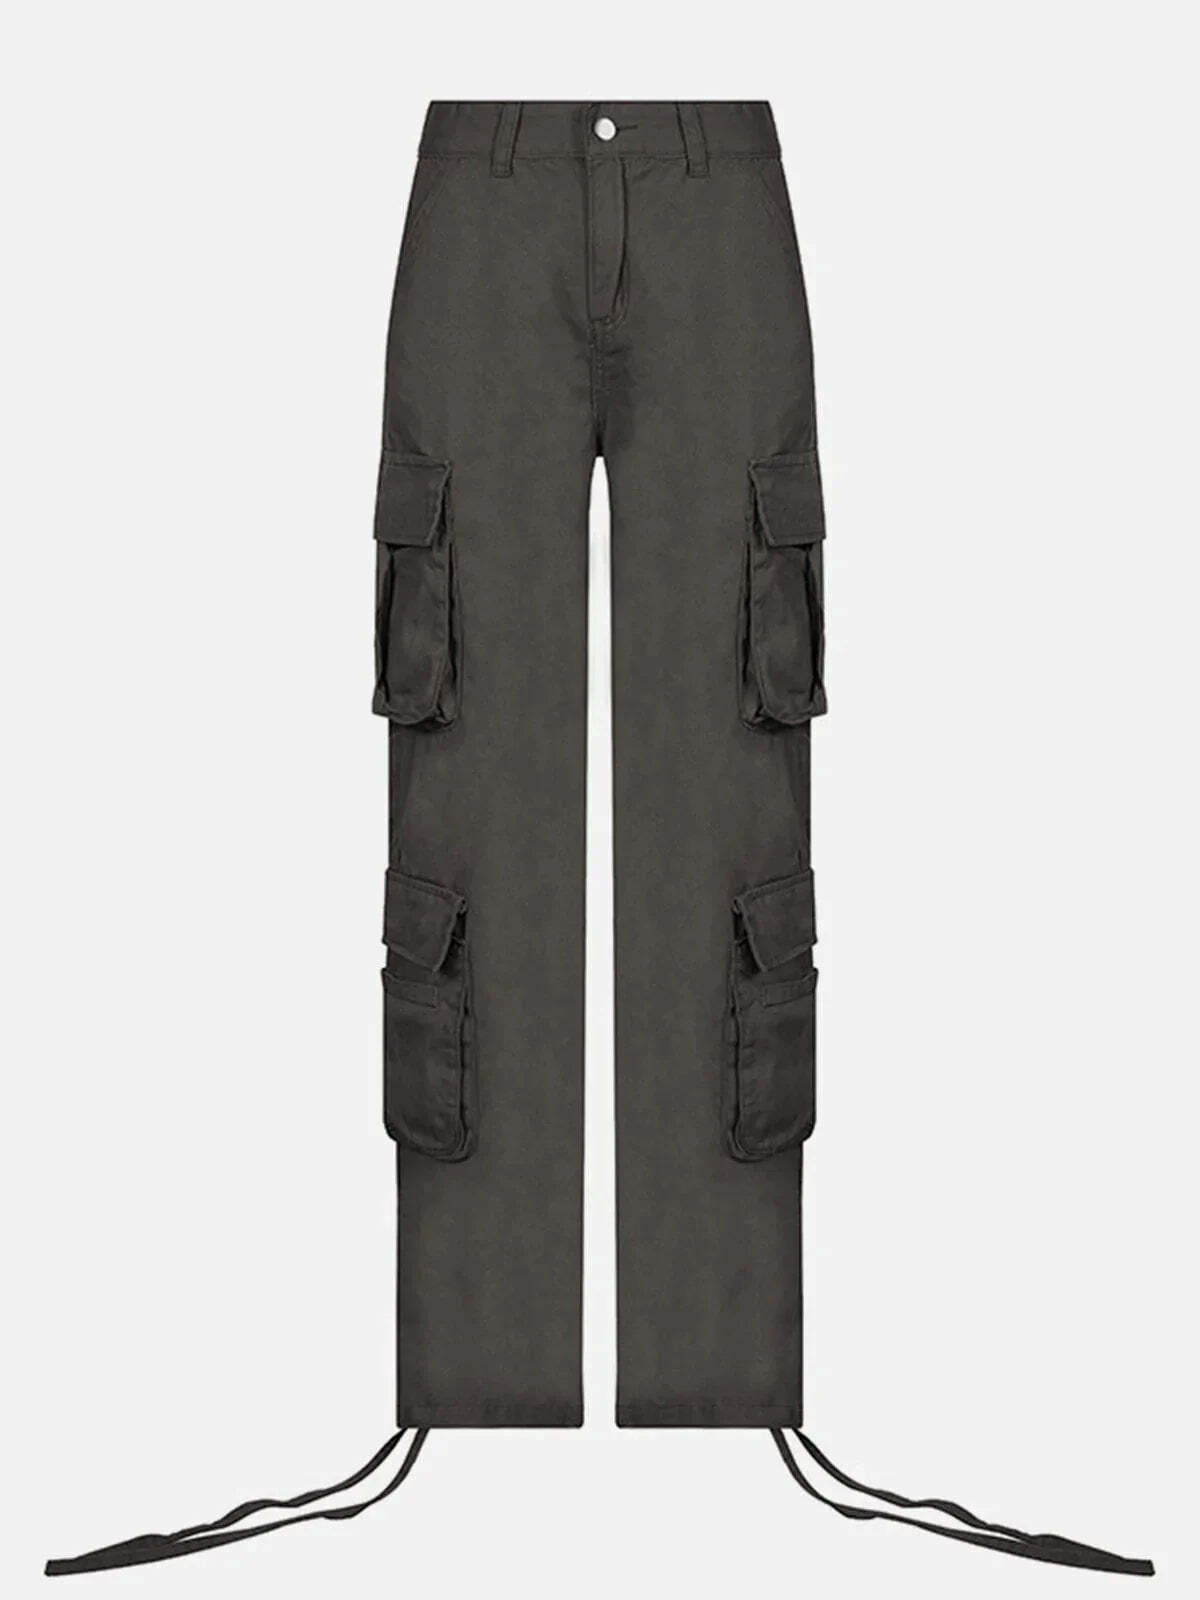 low waist cargo pants edgy & innovative streetwear 7086